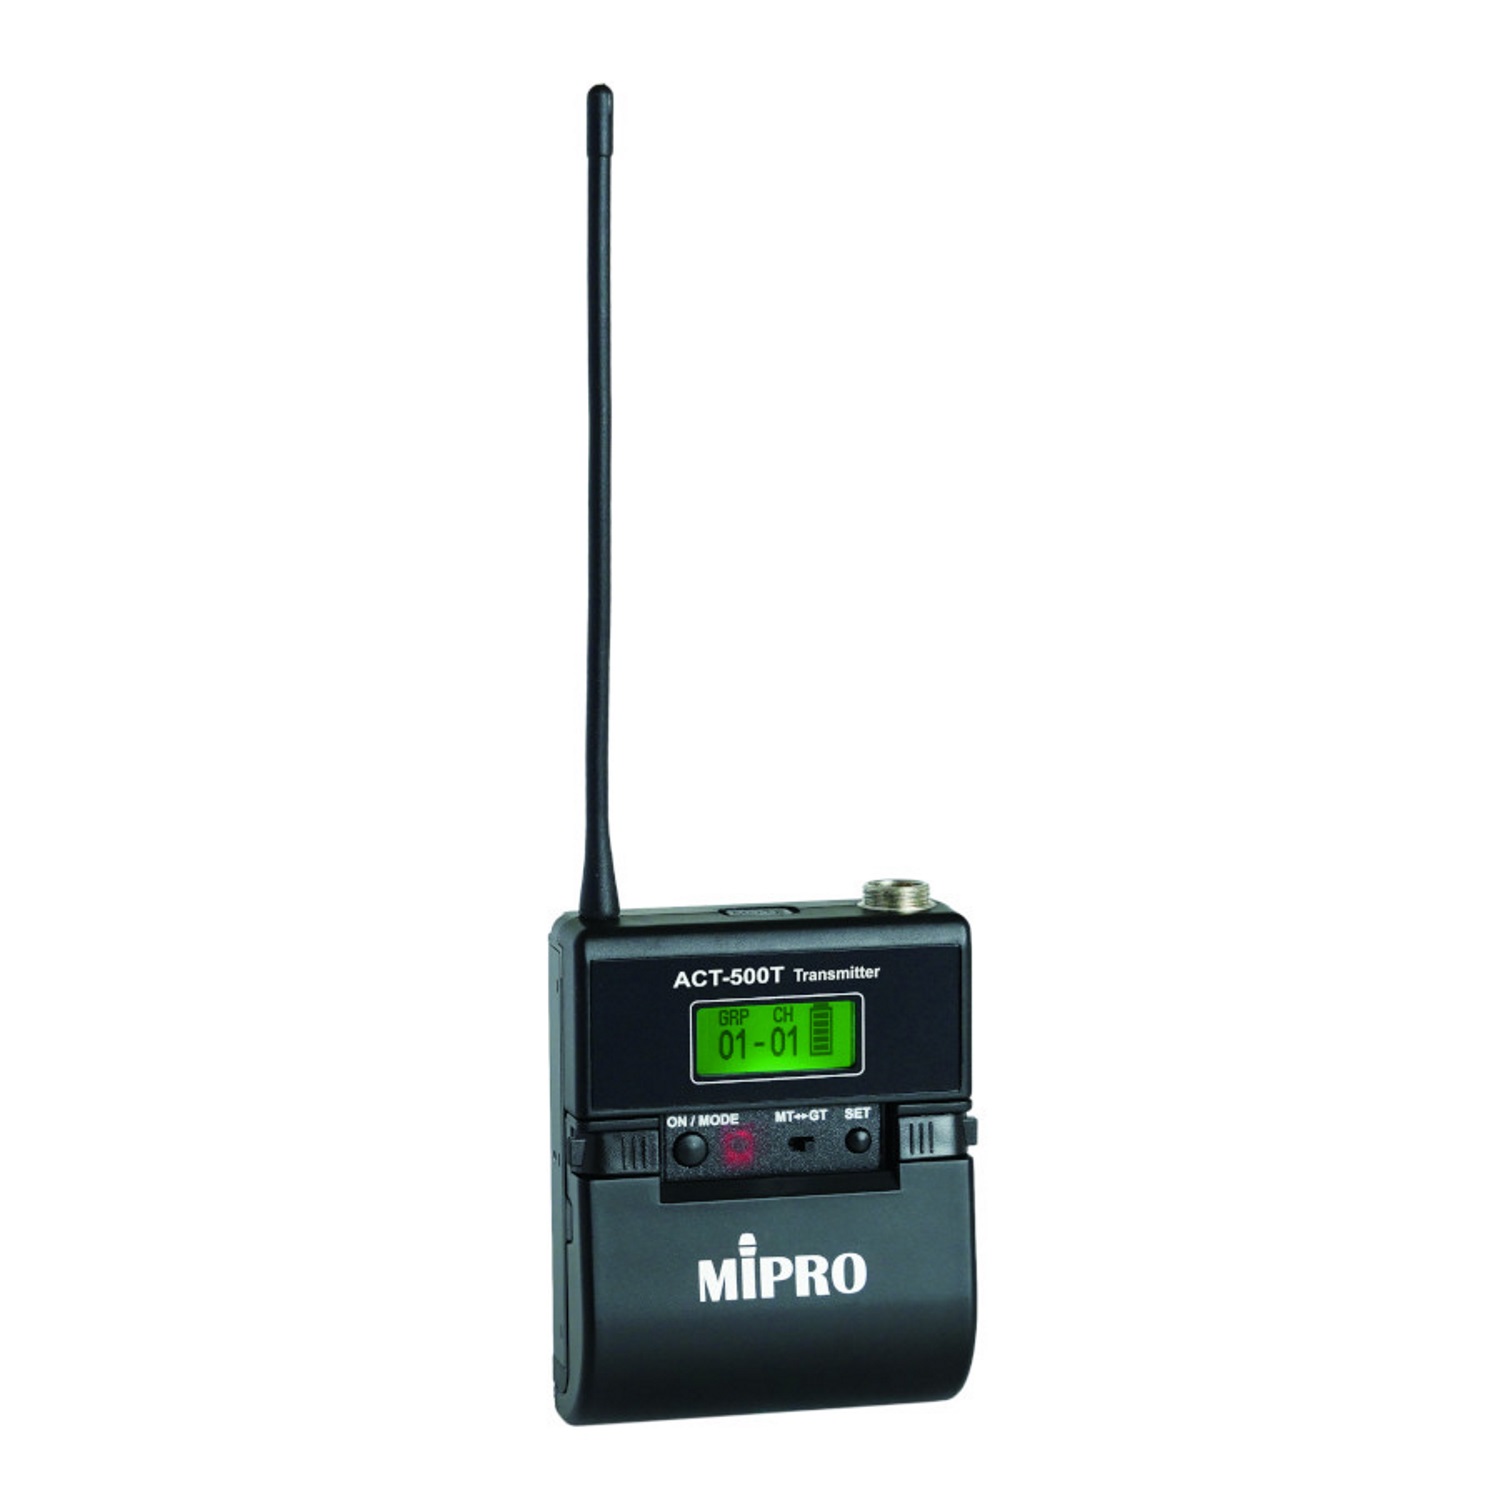 ACT-500T 823-832 pocket transmitter